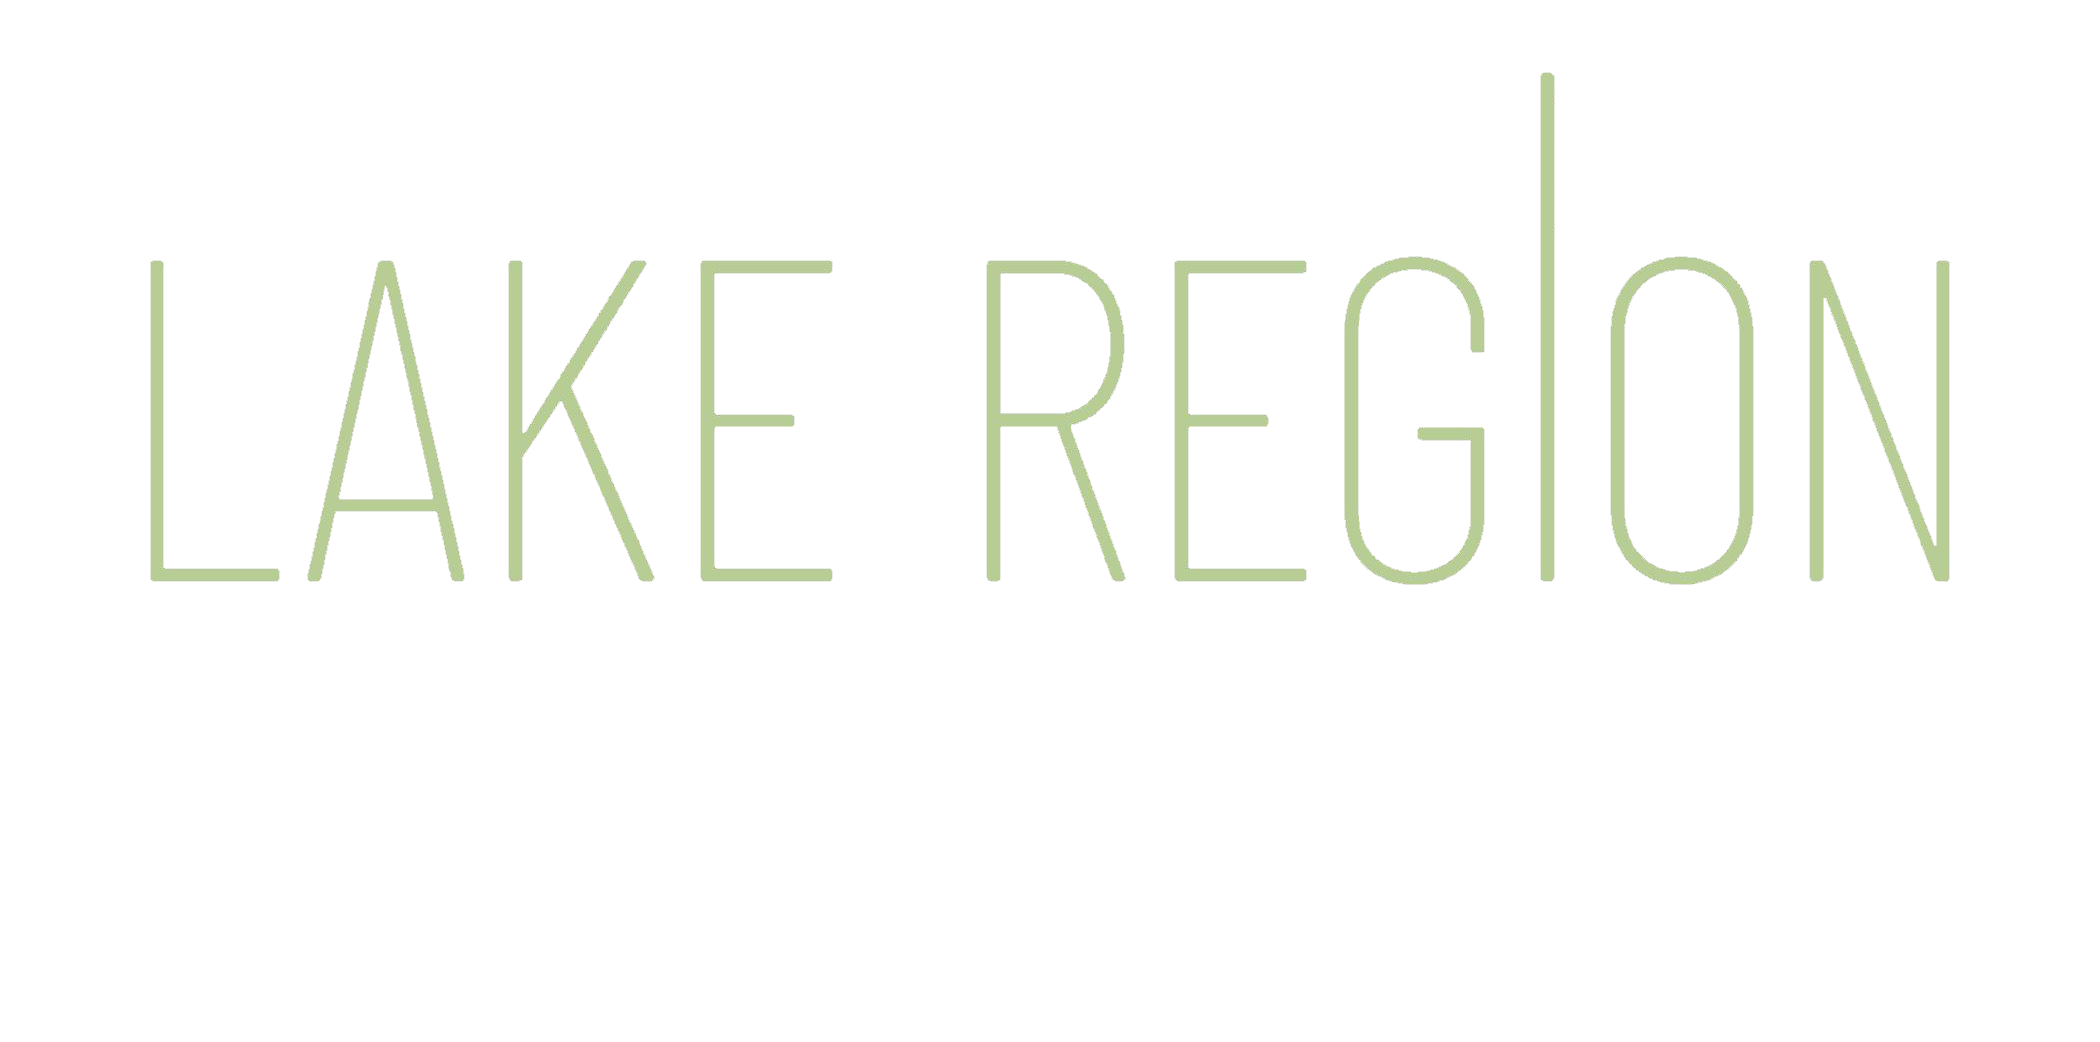 Lake Region Golf Club - Whitescale